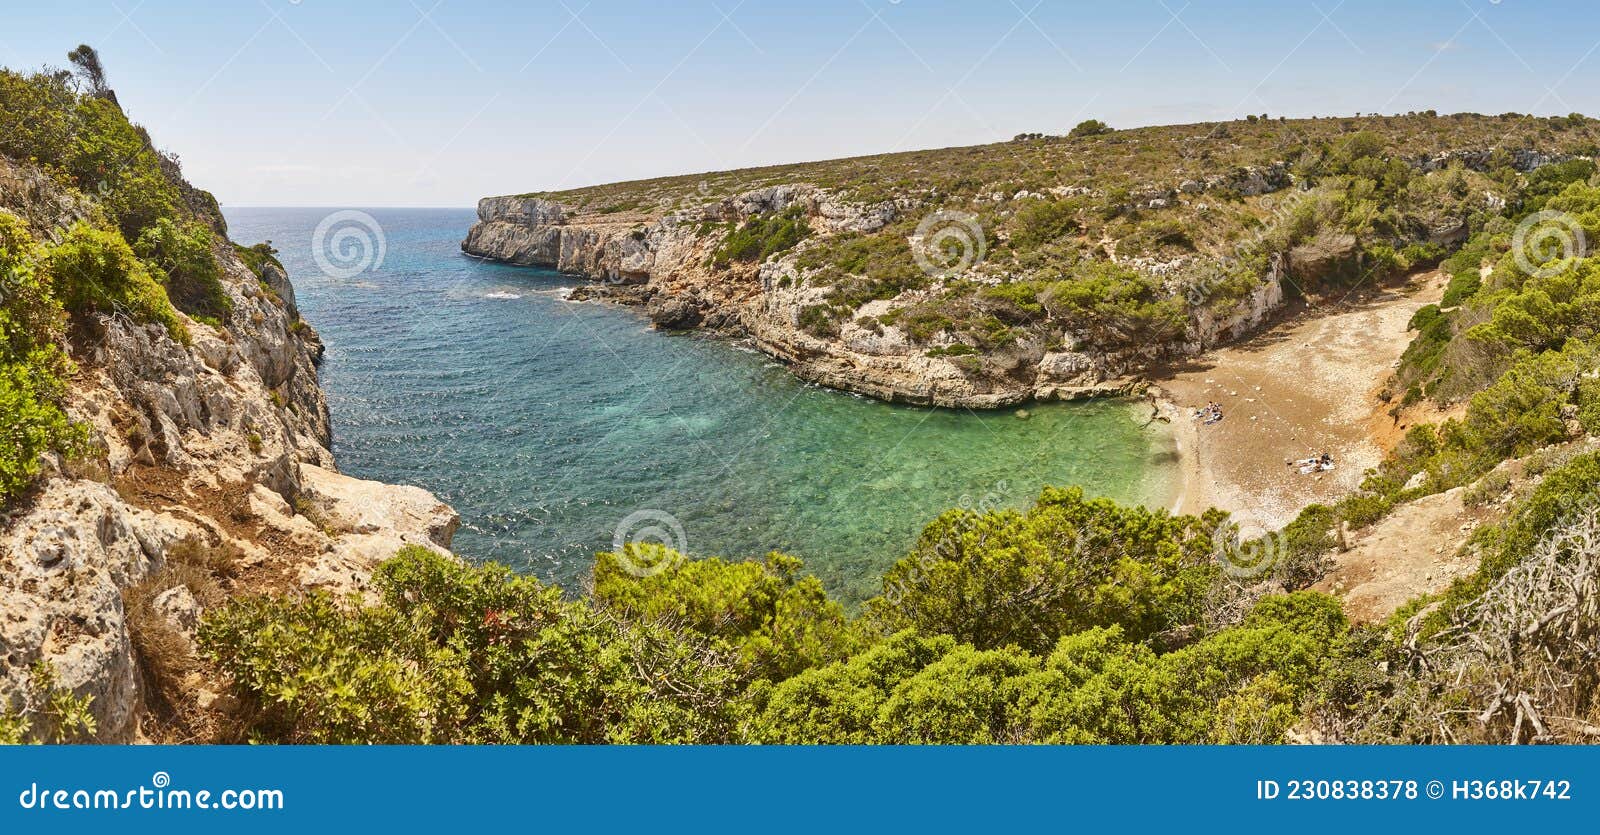 turquoise waters in mallorca. bota cove. panoramic mediterranean coastline. balearic